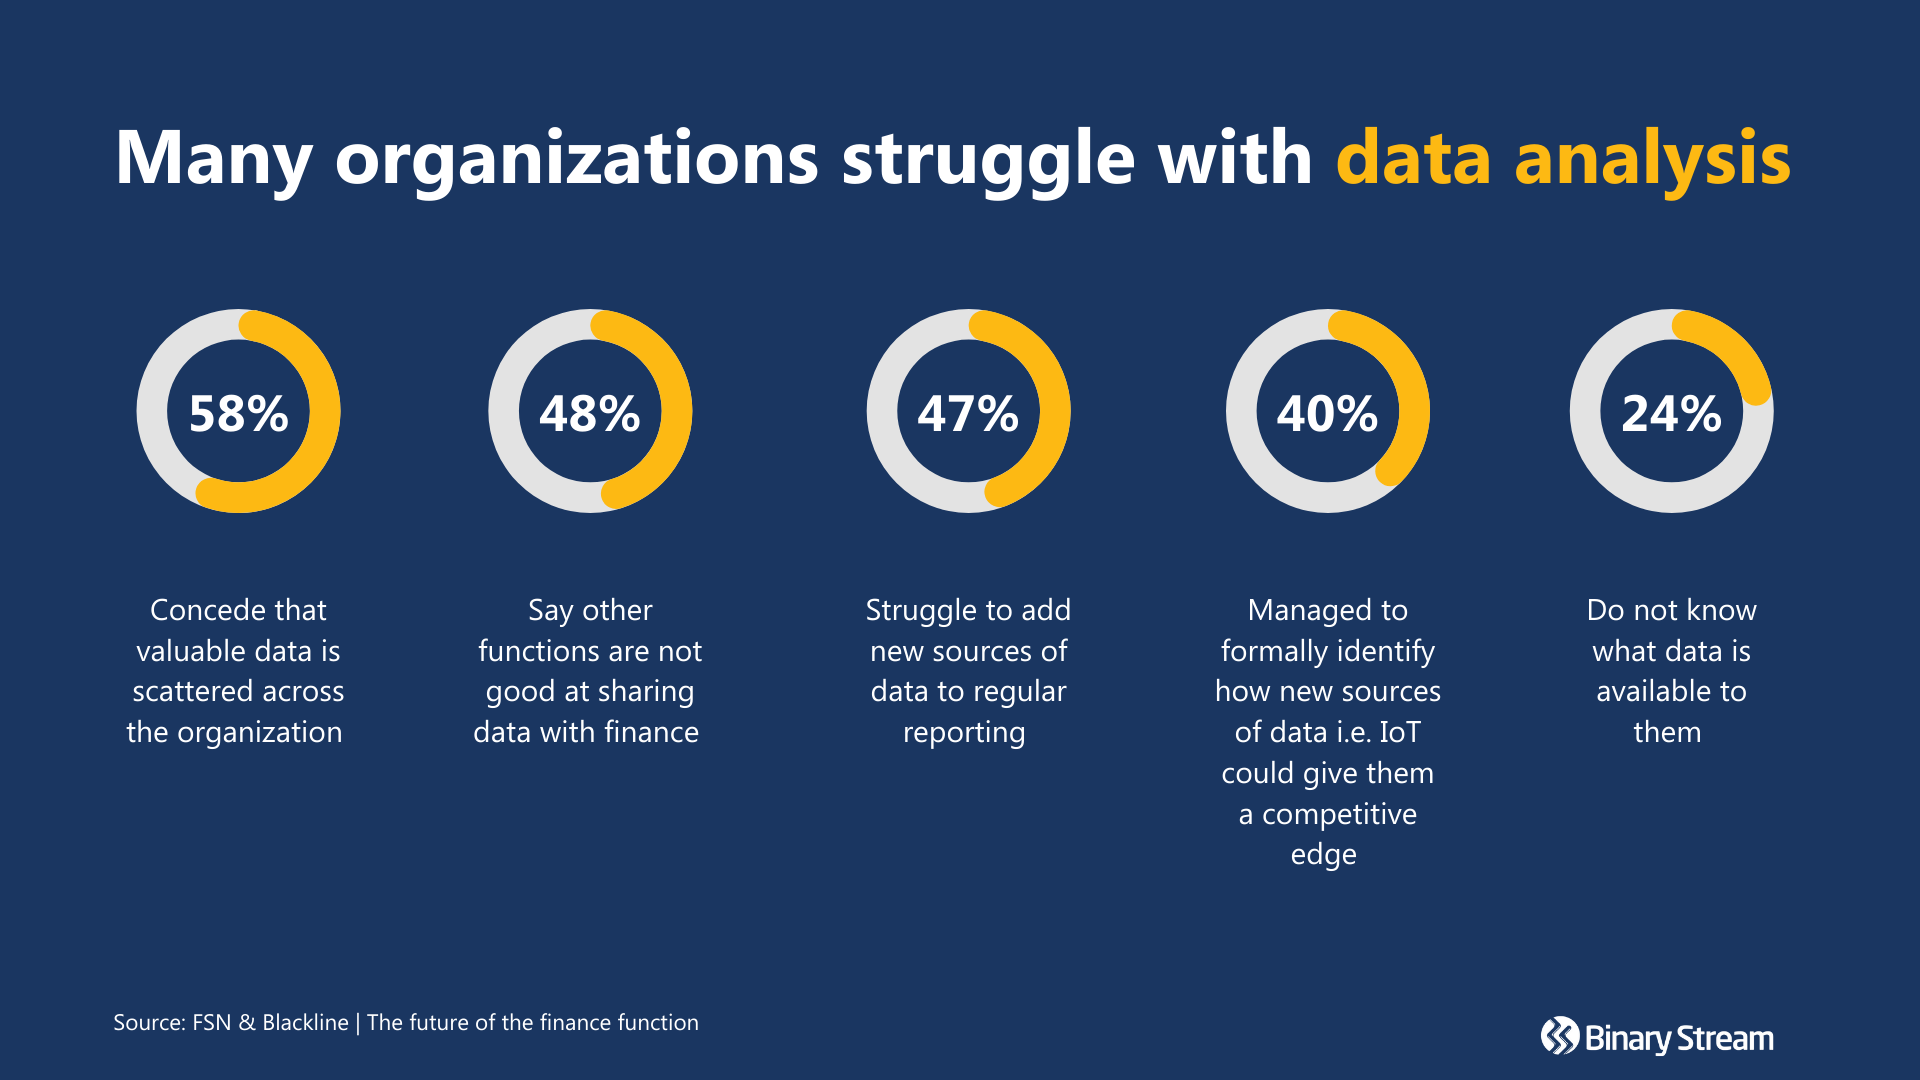 Organizations struggle with data analysis 